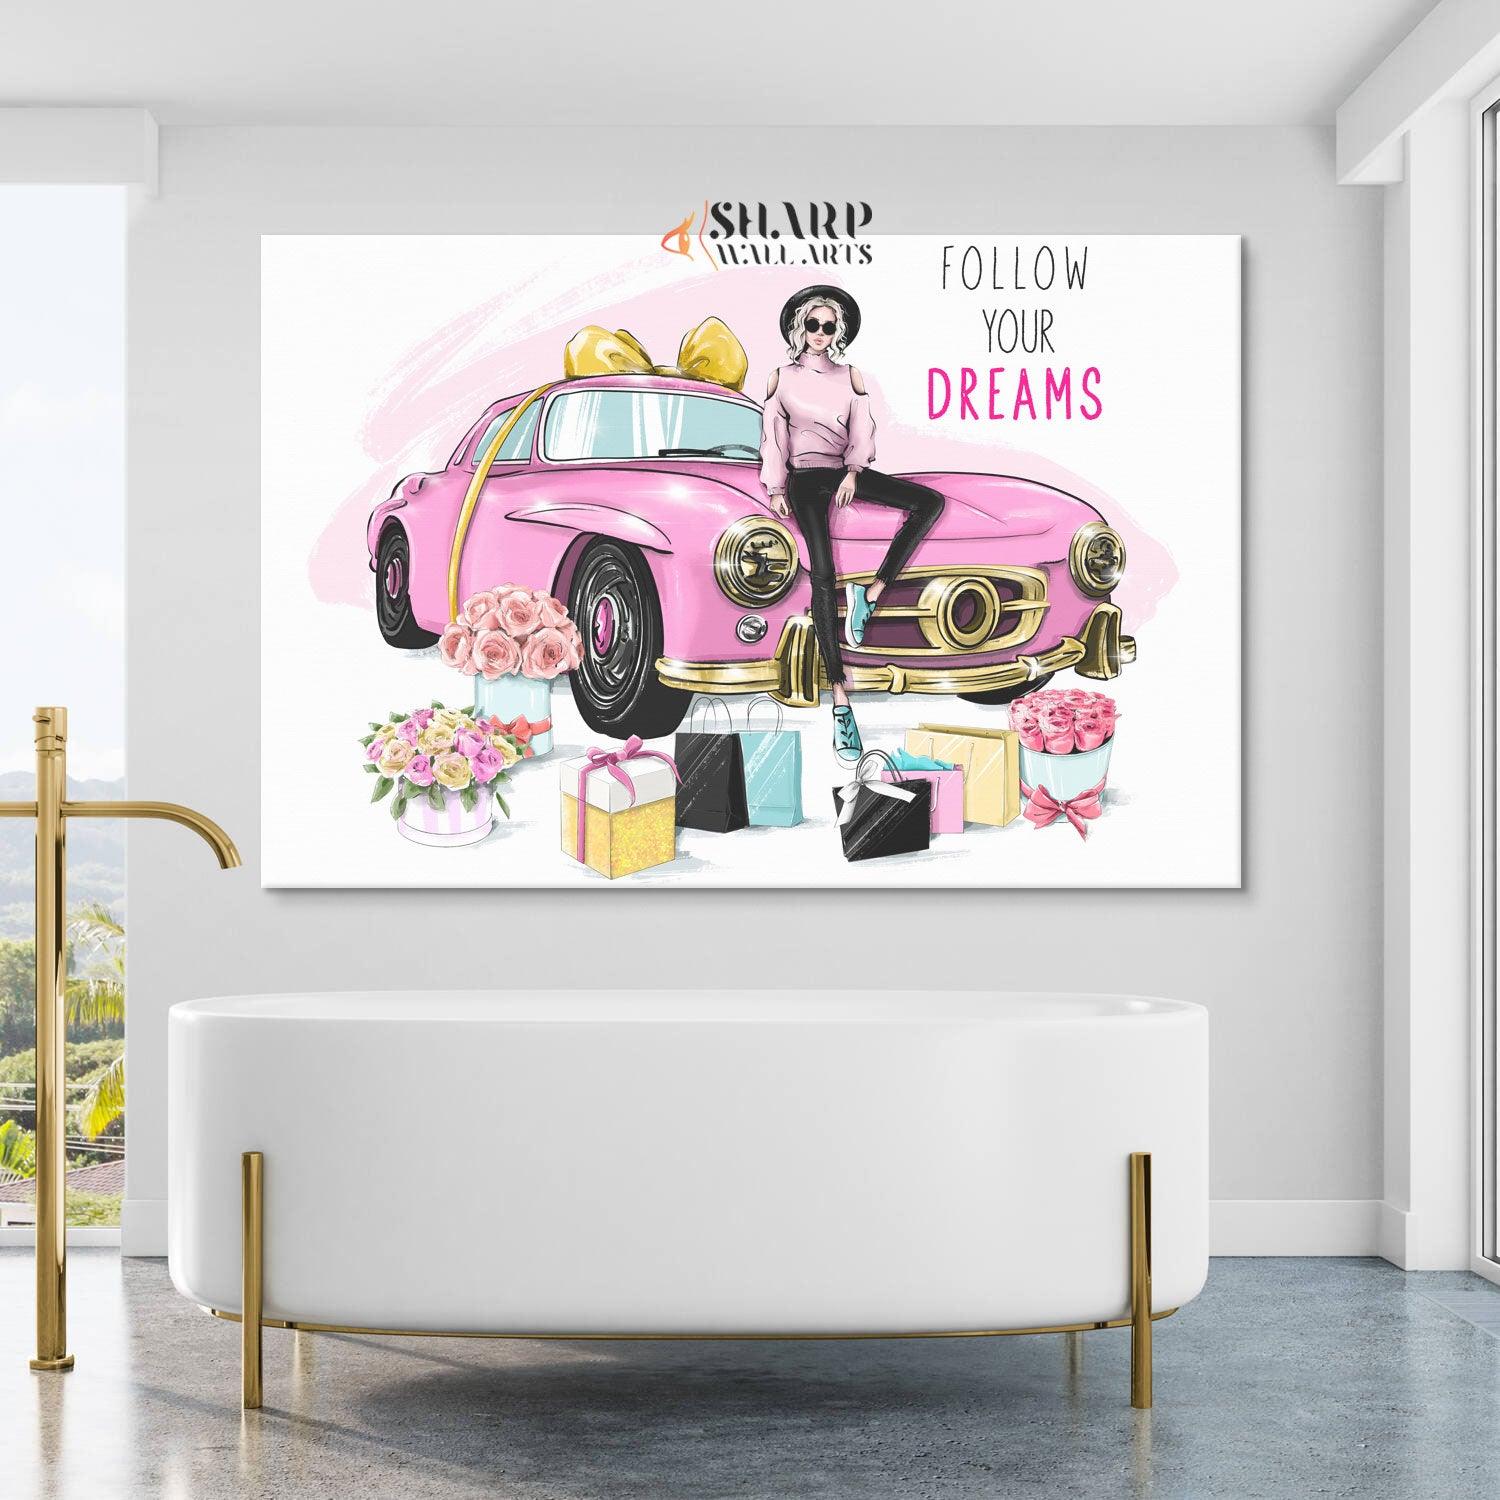 Follow Your Dreams - Fashion Wall Art - SharpWallArts